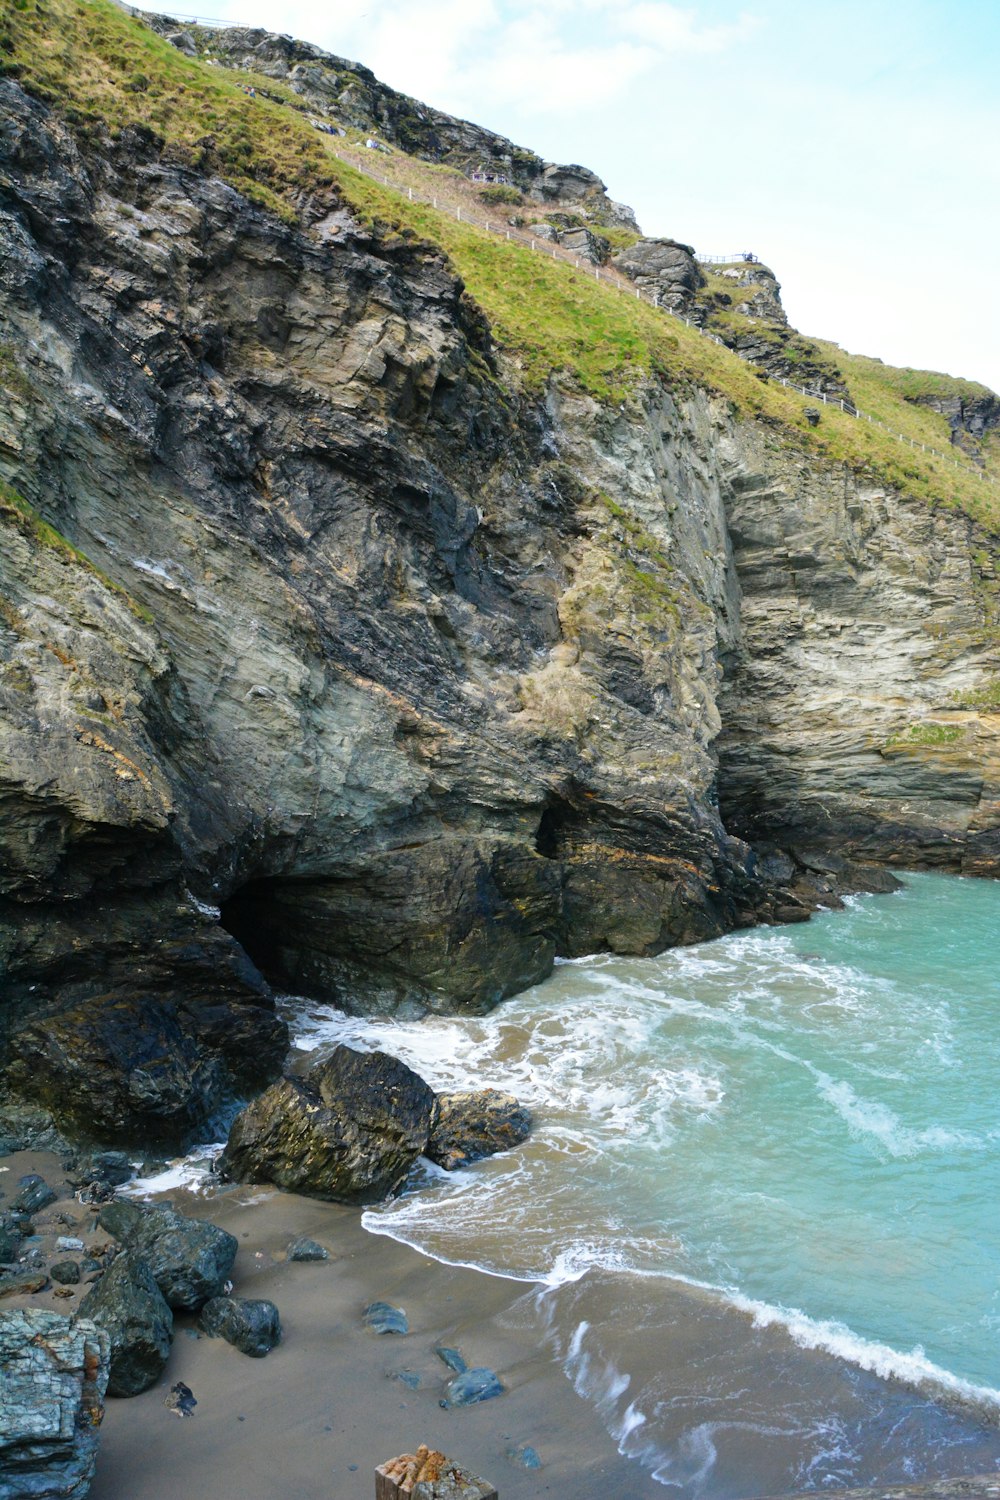 a rocky cliff next to a beach